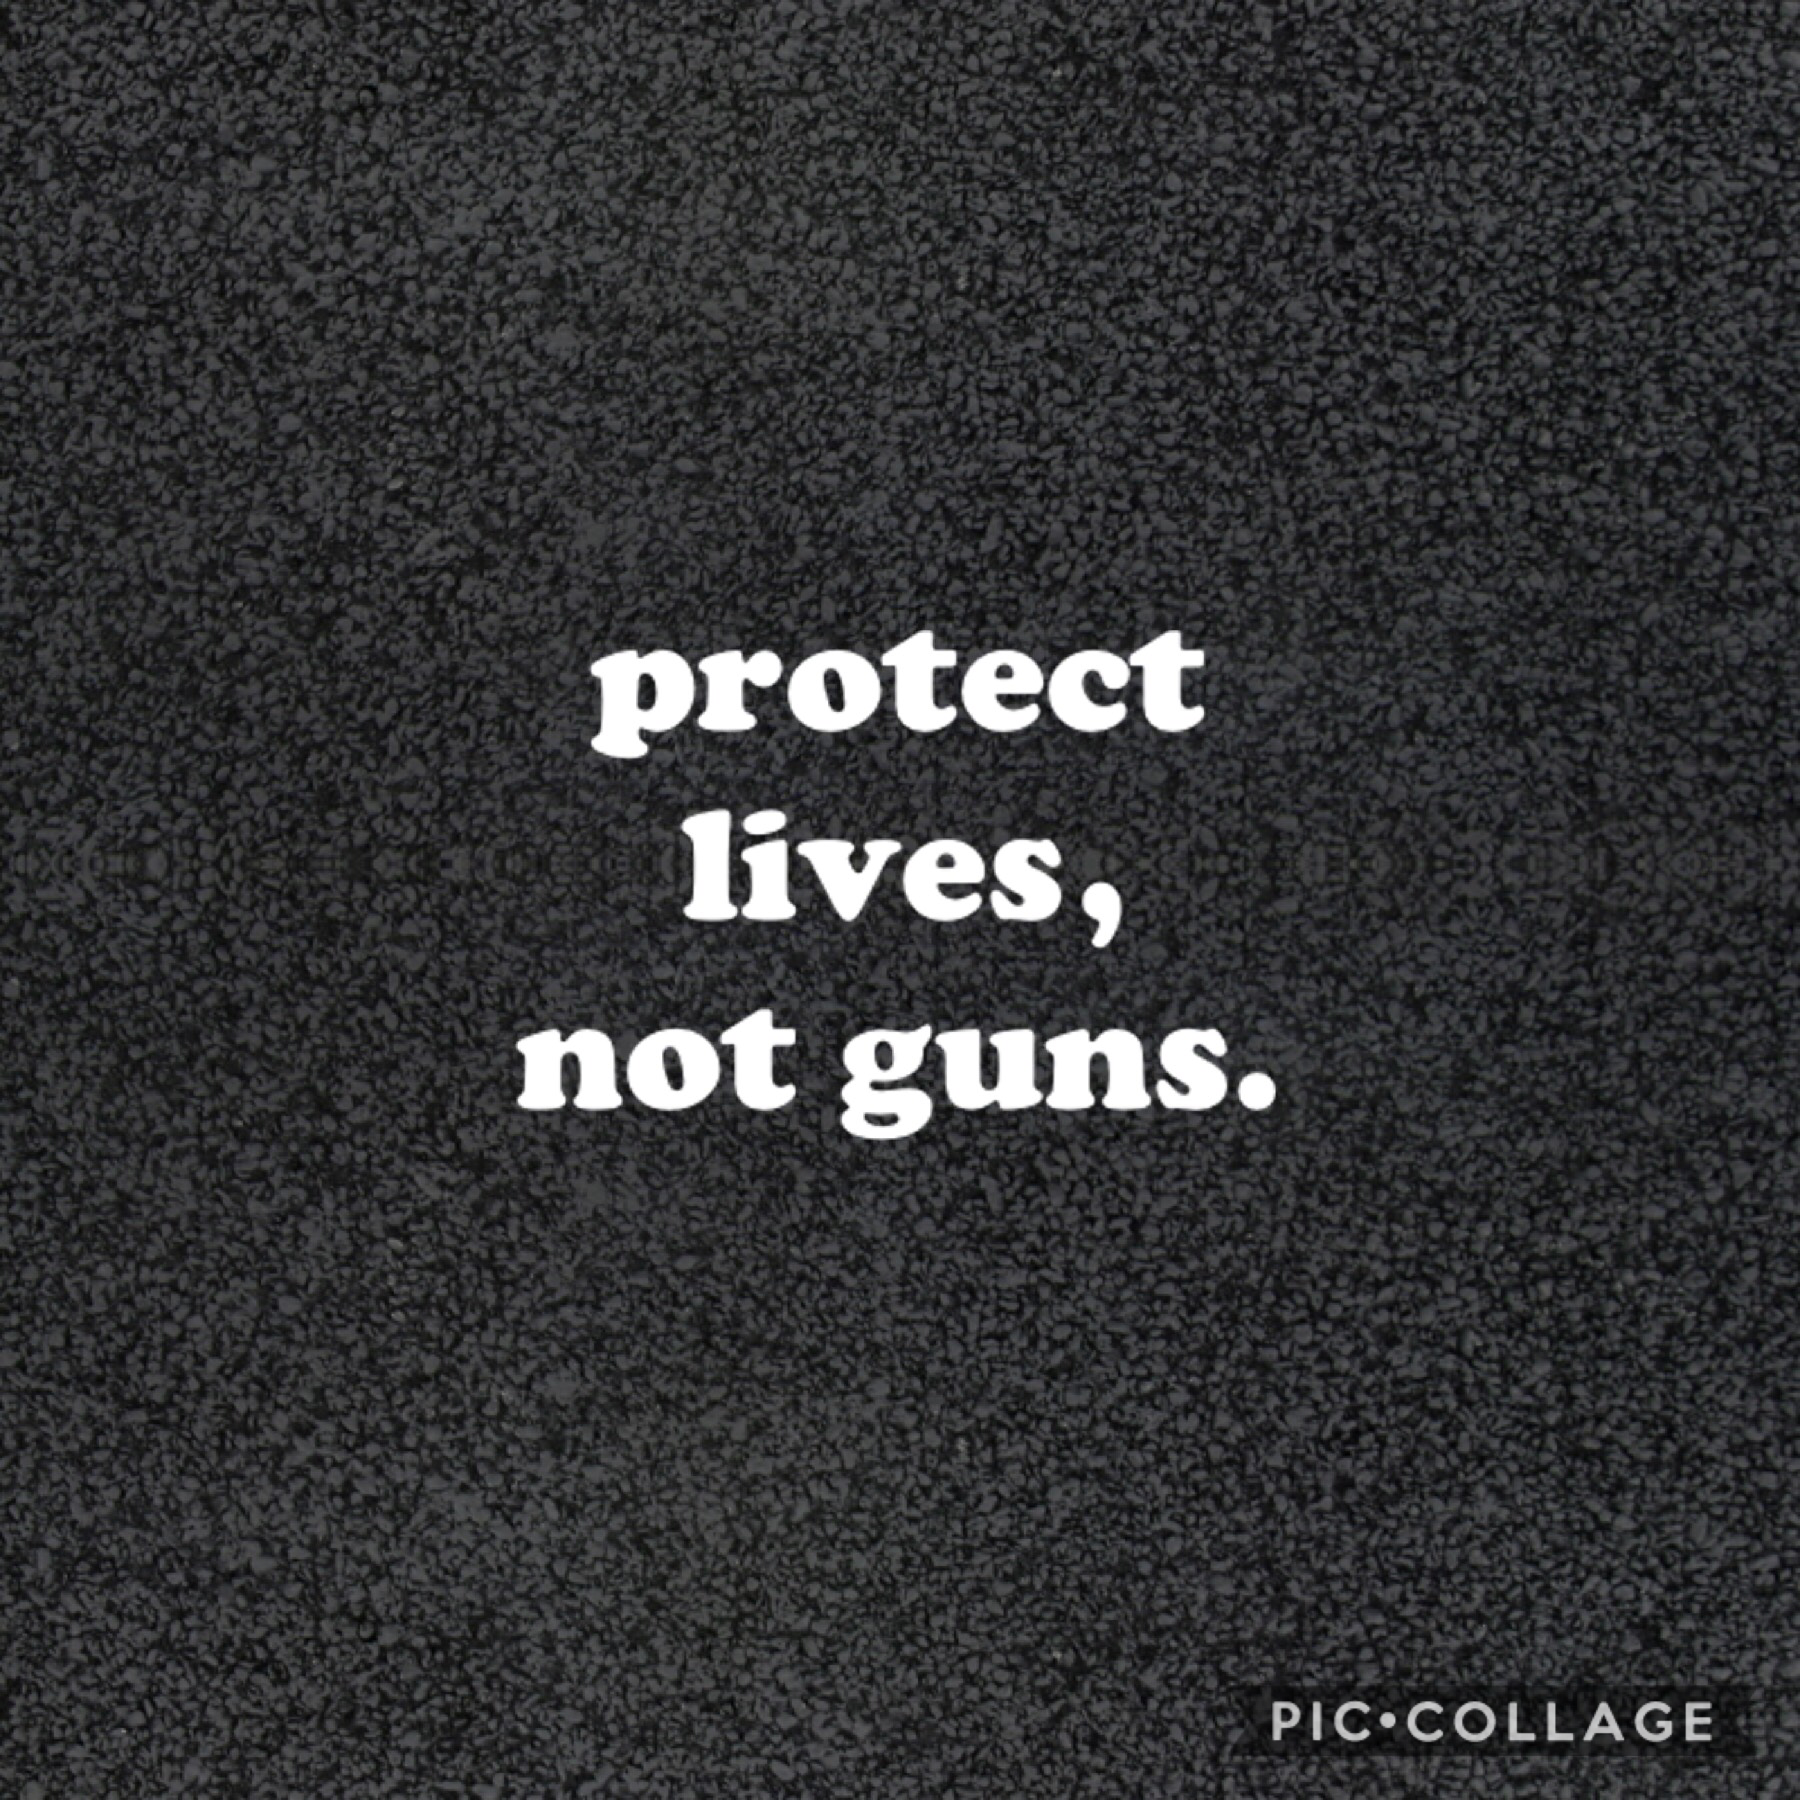 Save lives. Put your gun down.
